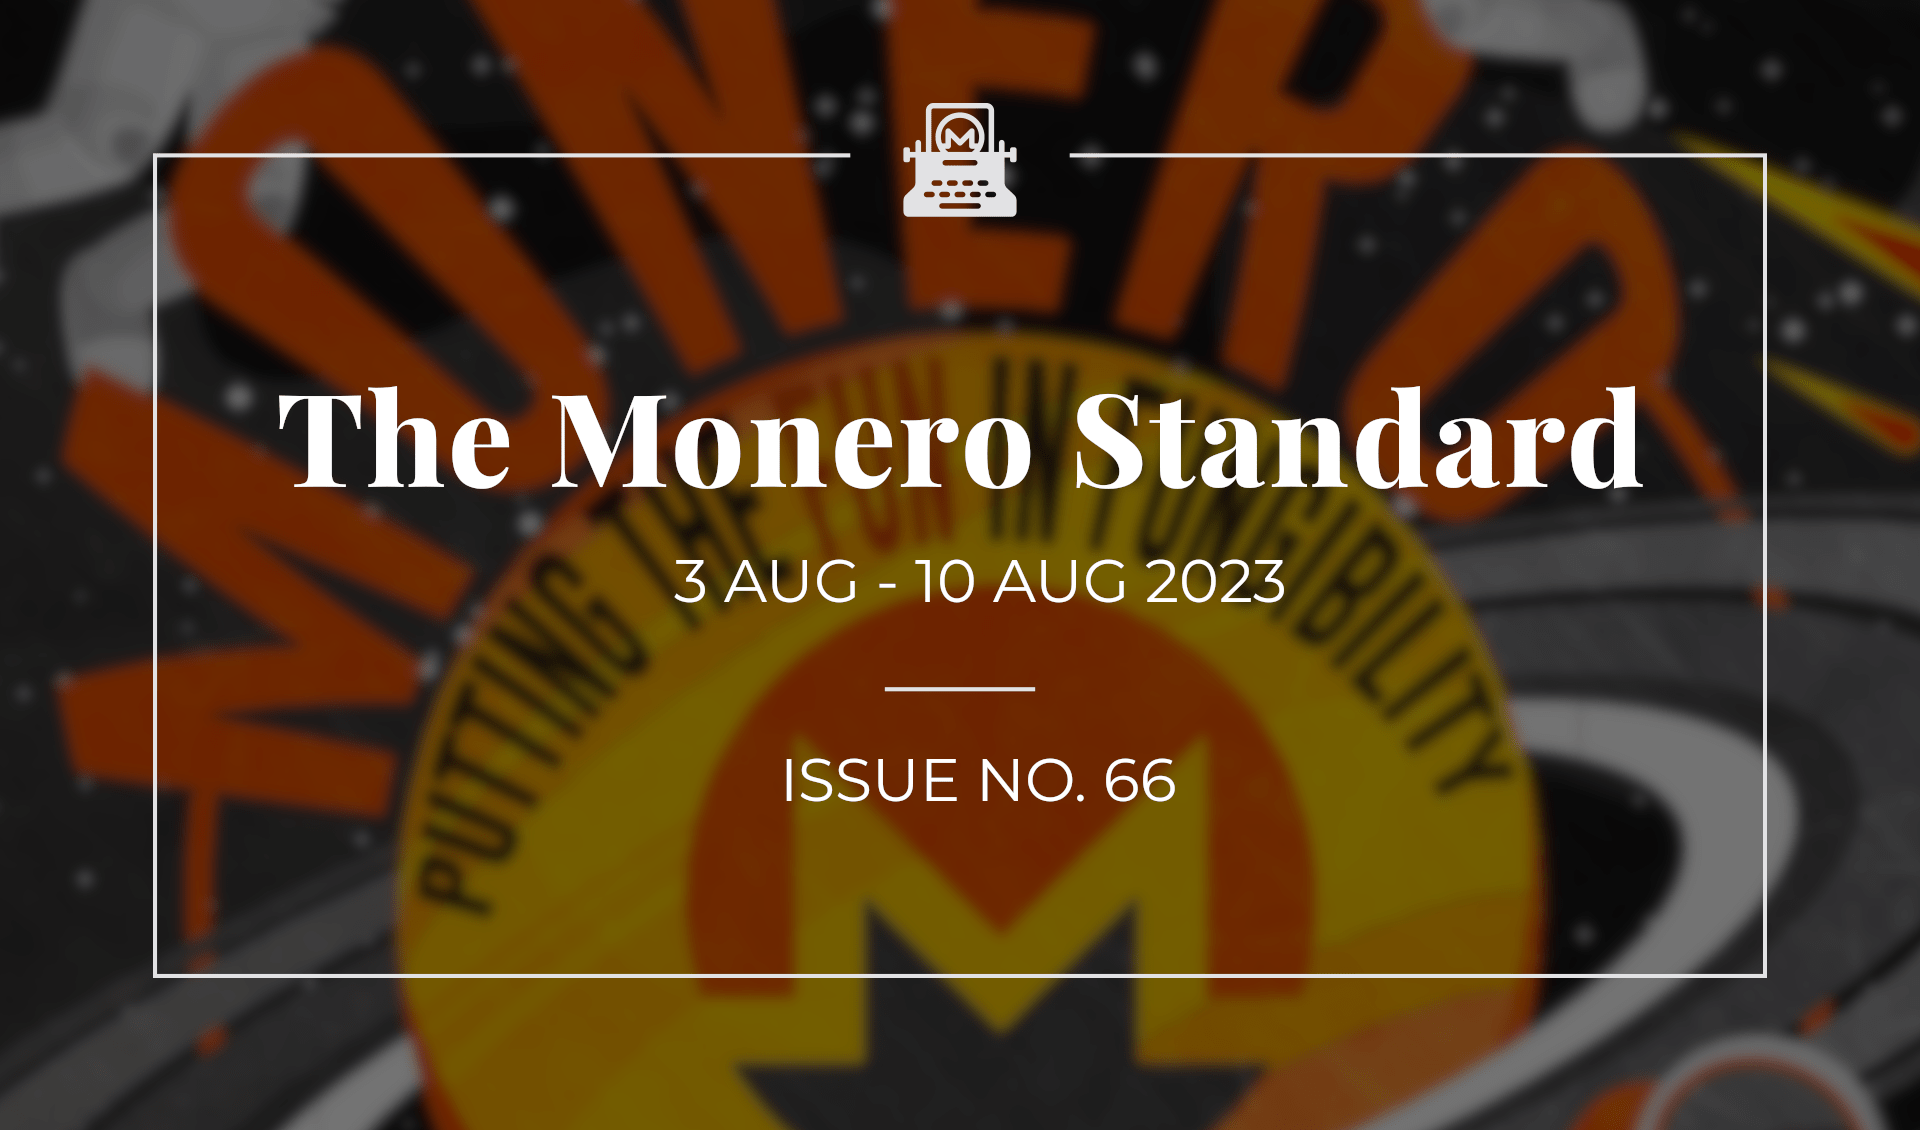 The Monero Standard #66: 3 Aug 2023 - 10 Aug 2023